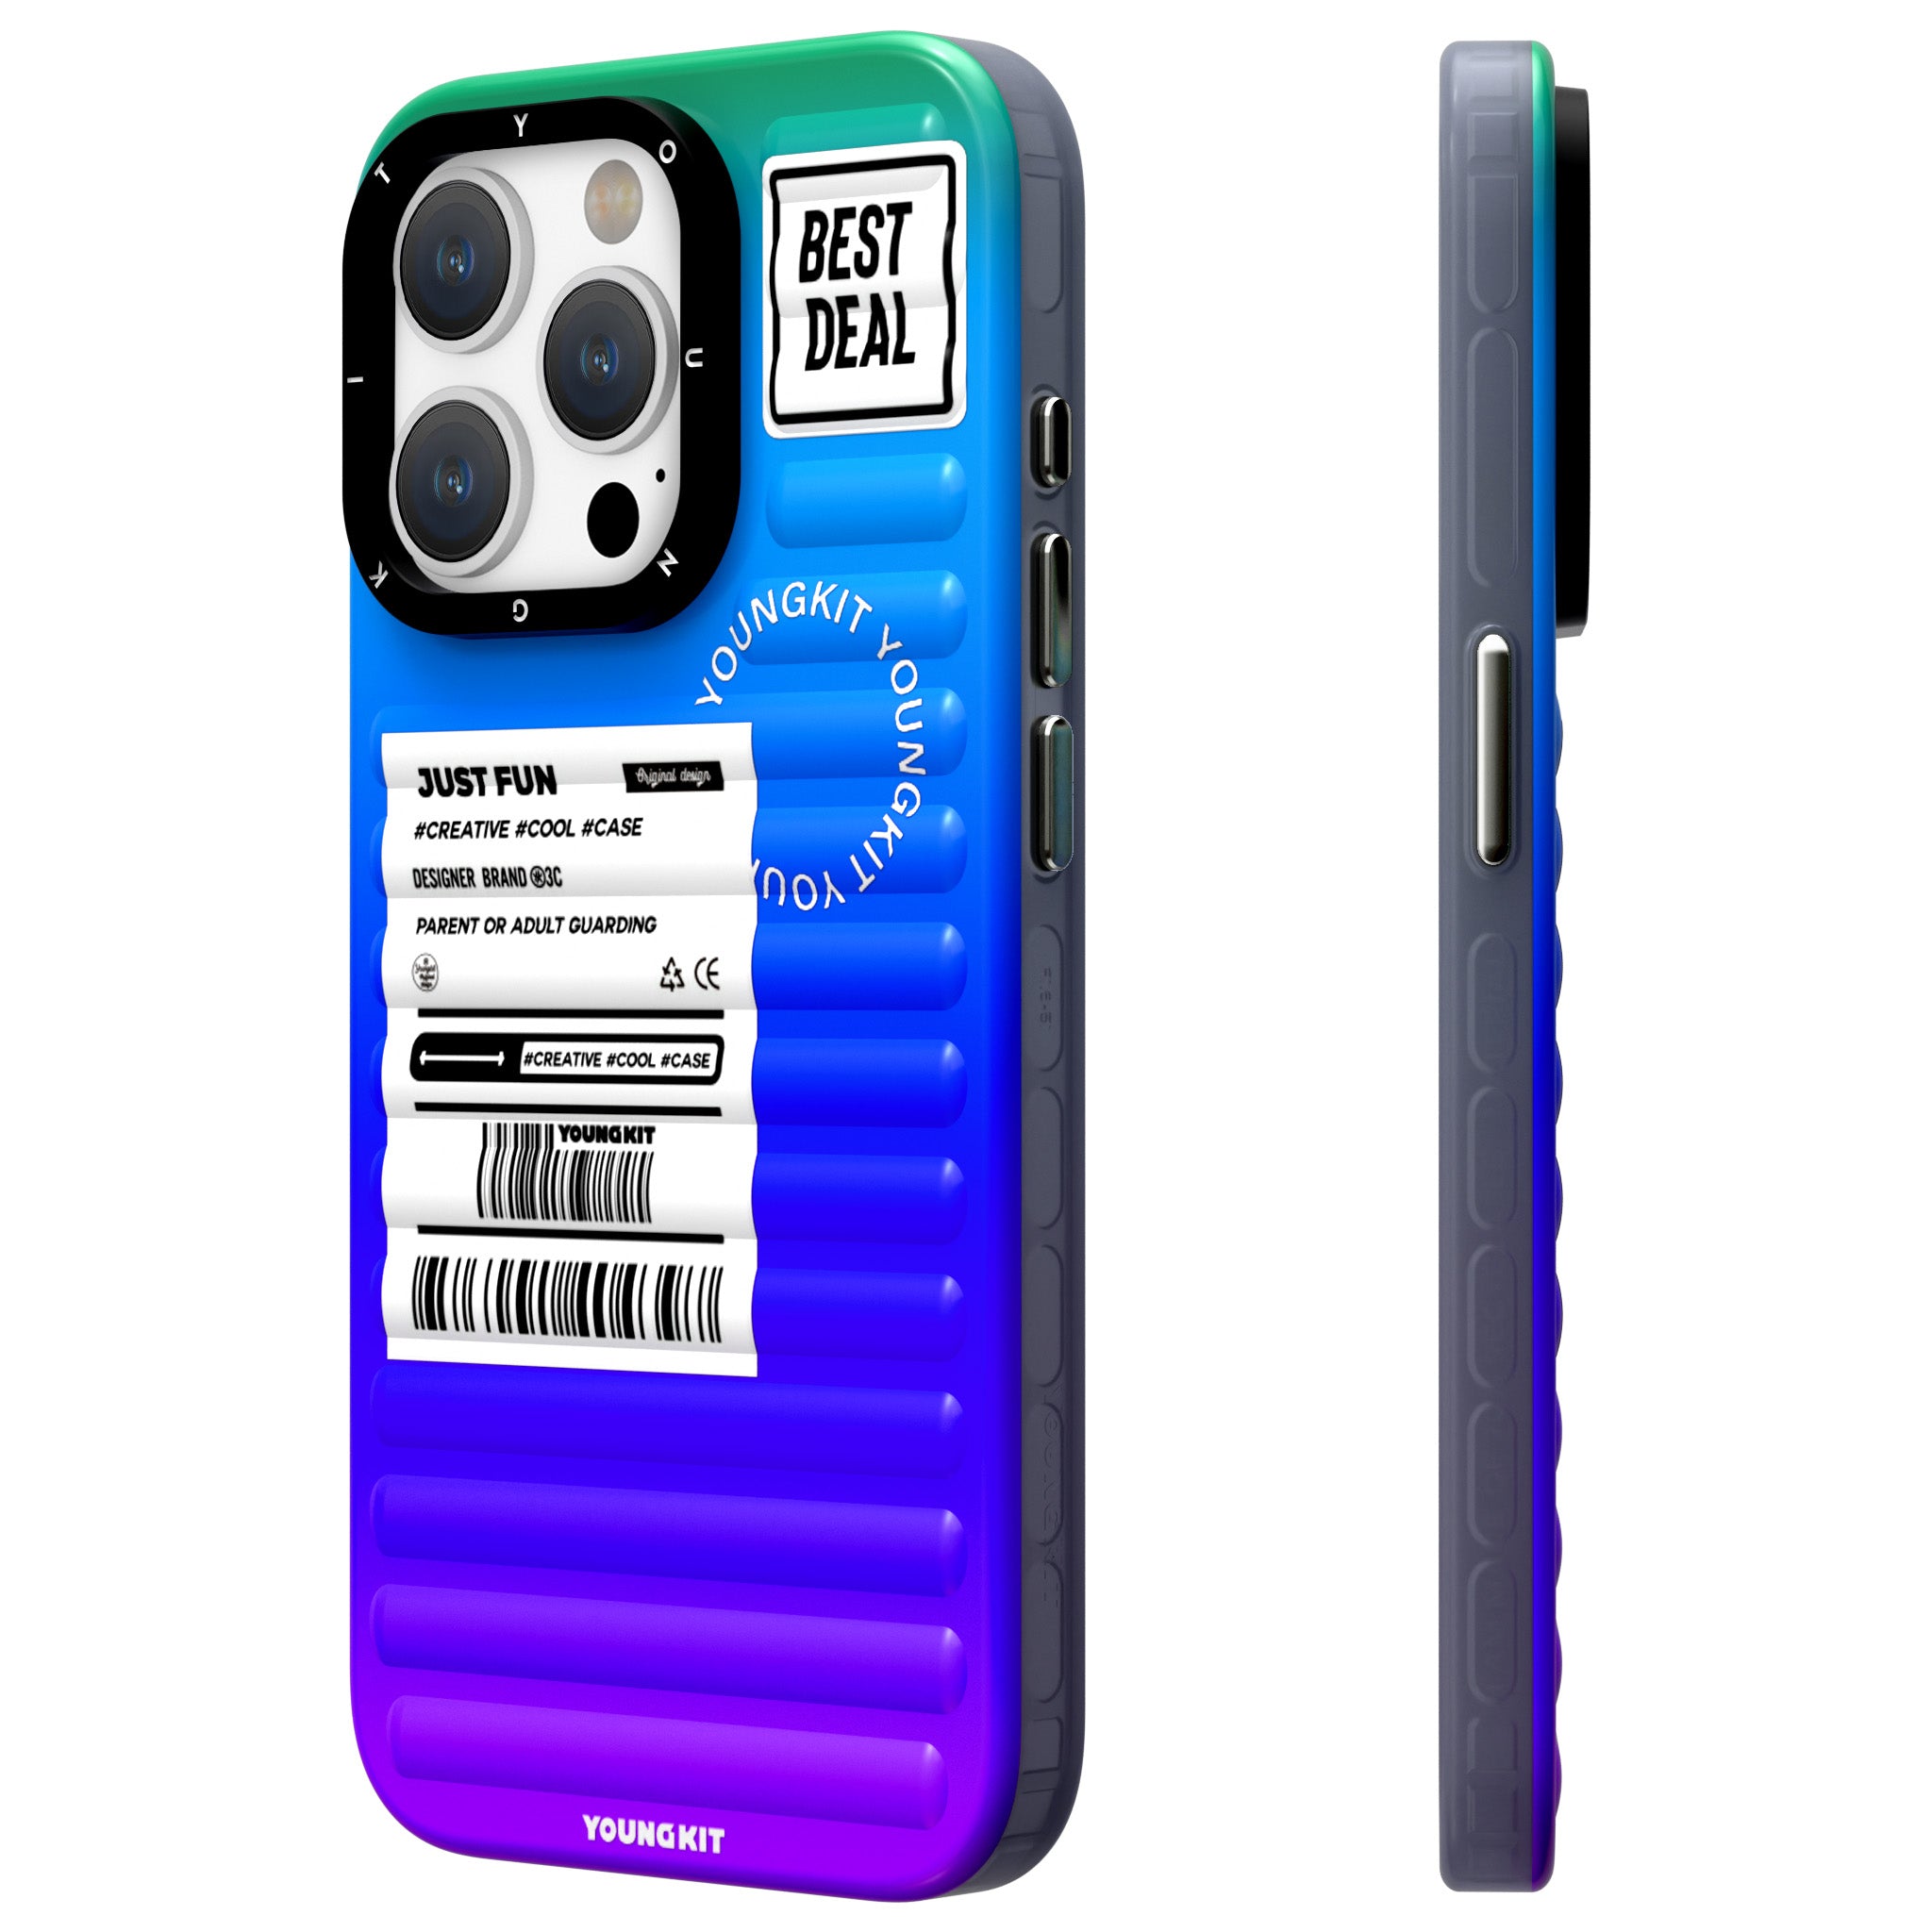 Mysterious Multicolor Gradient iPhone13/14/15 Case